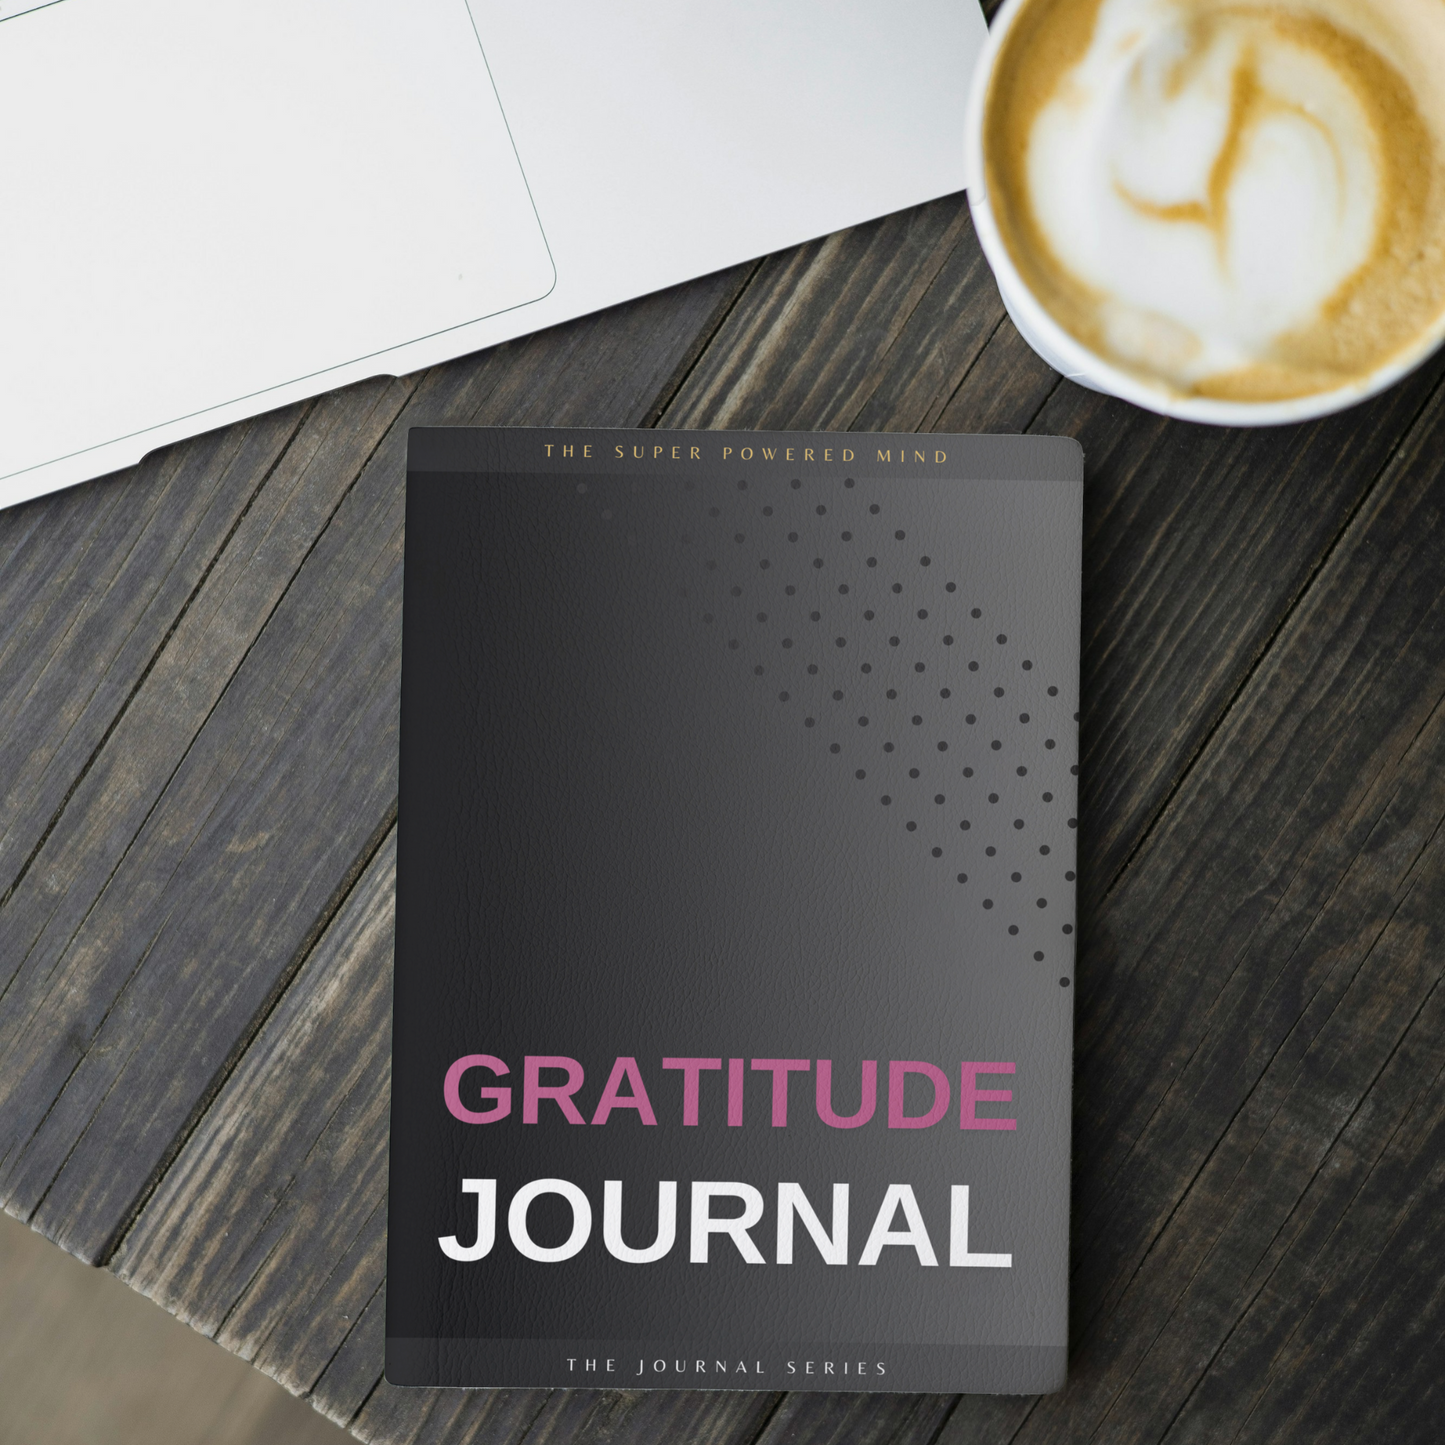 Gratitude Journal (The Journal Series) - Digital Download eBook